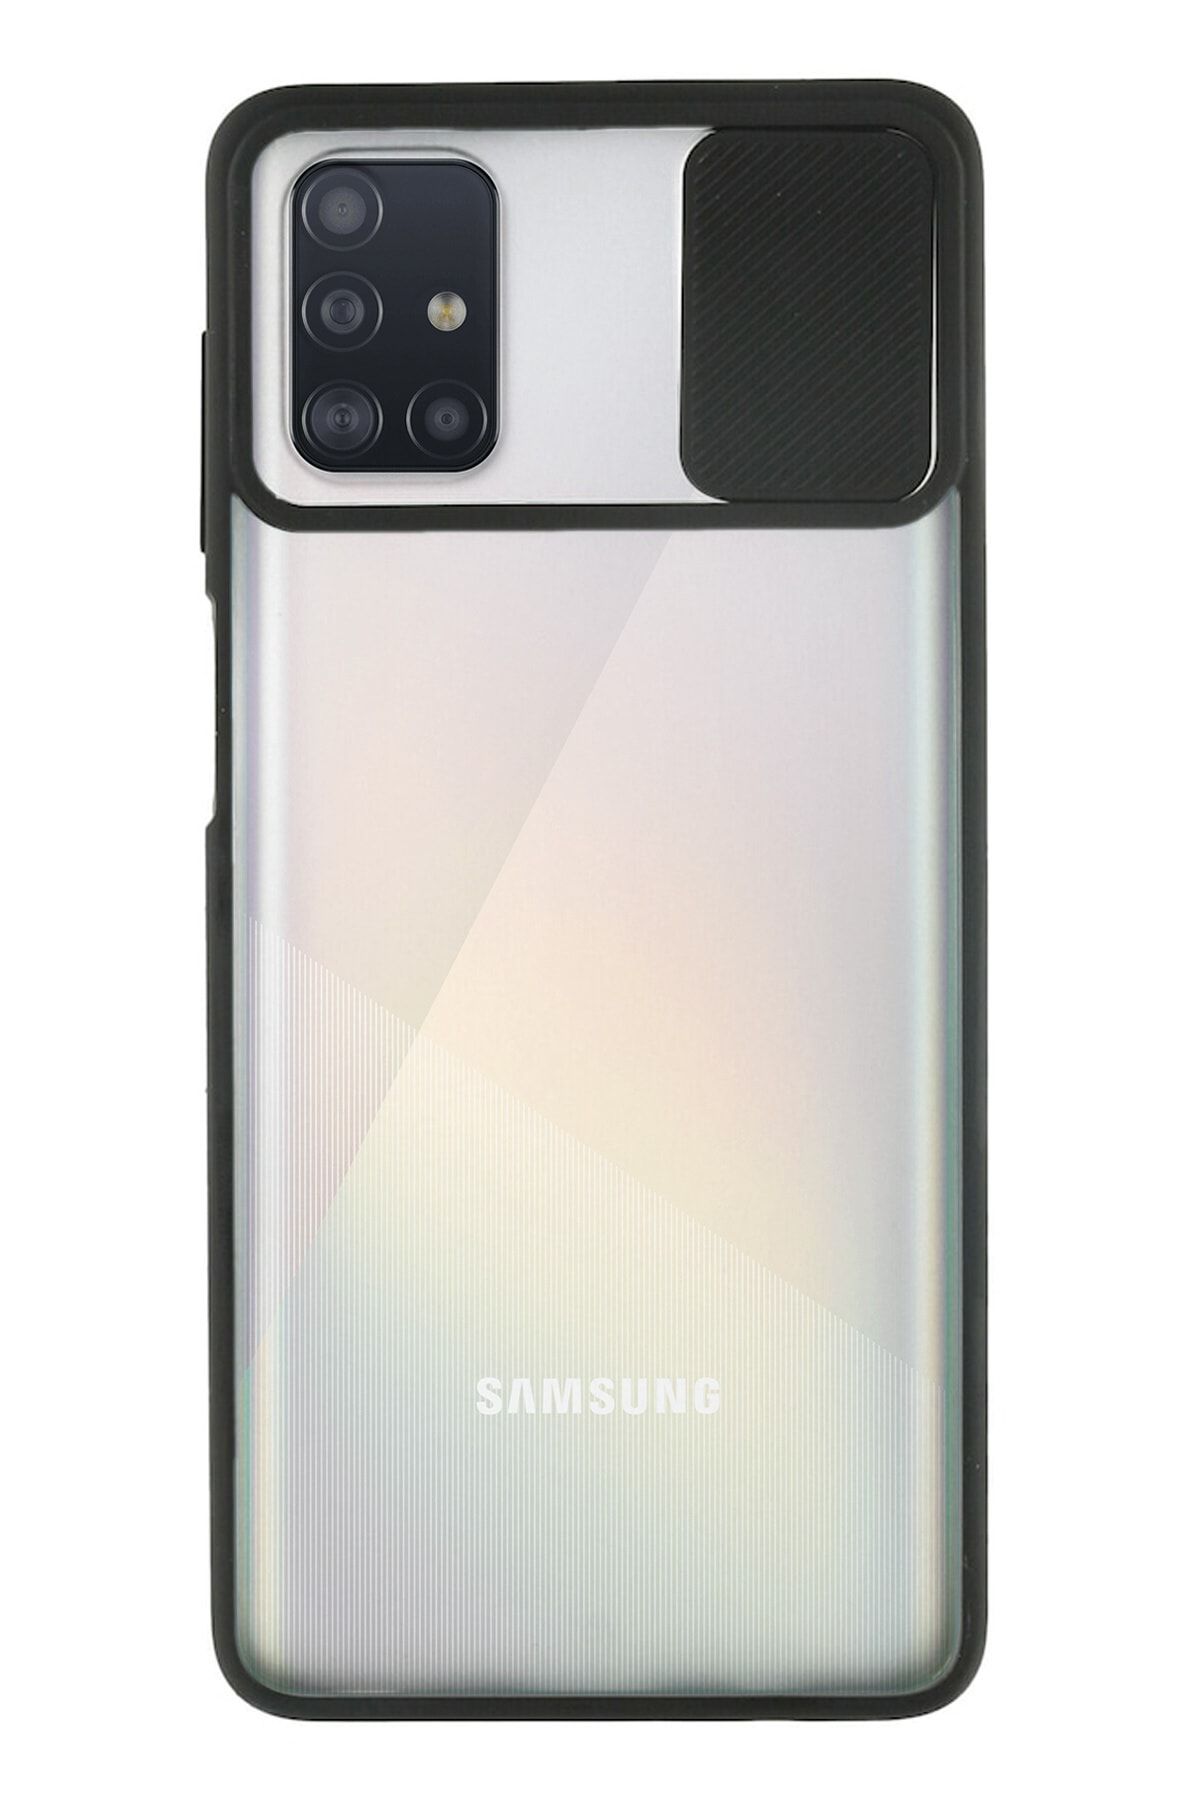 KZY İletişim Samsung Galaxy A71 Uyumlu Kapak Lensi Açılır Kapanır Kamera Korumalı Silikon Kılıf